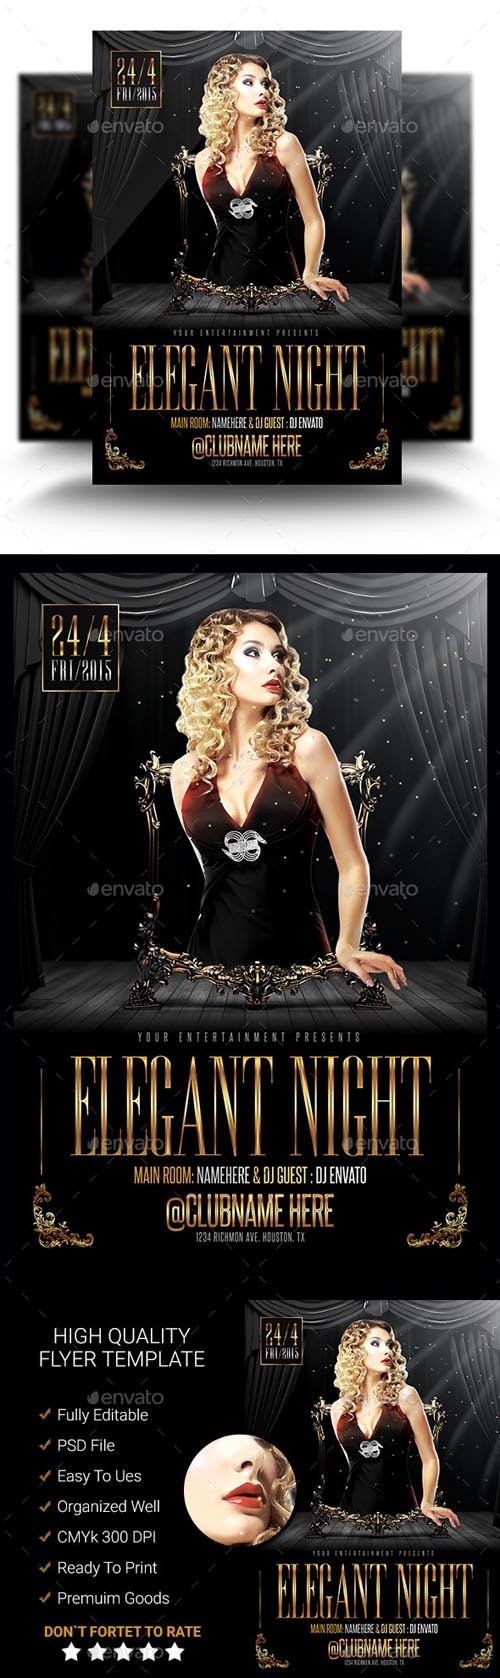 Flyer Template PSD - Elegant Night 02